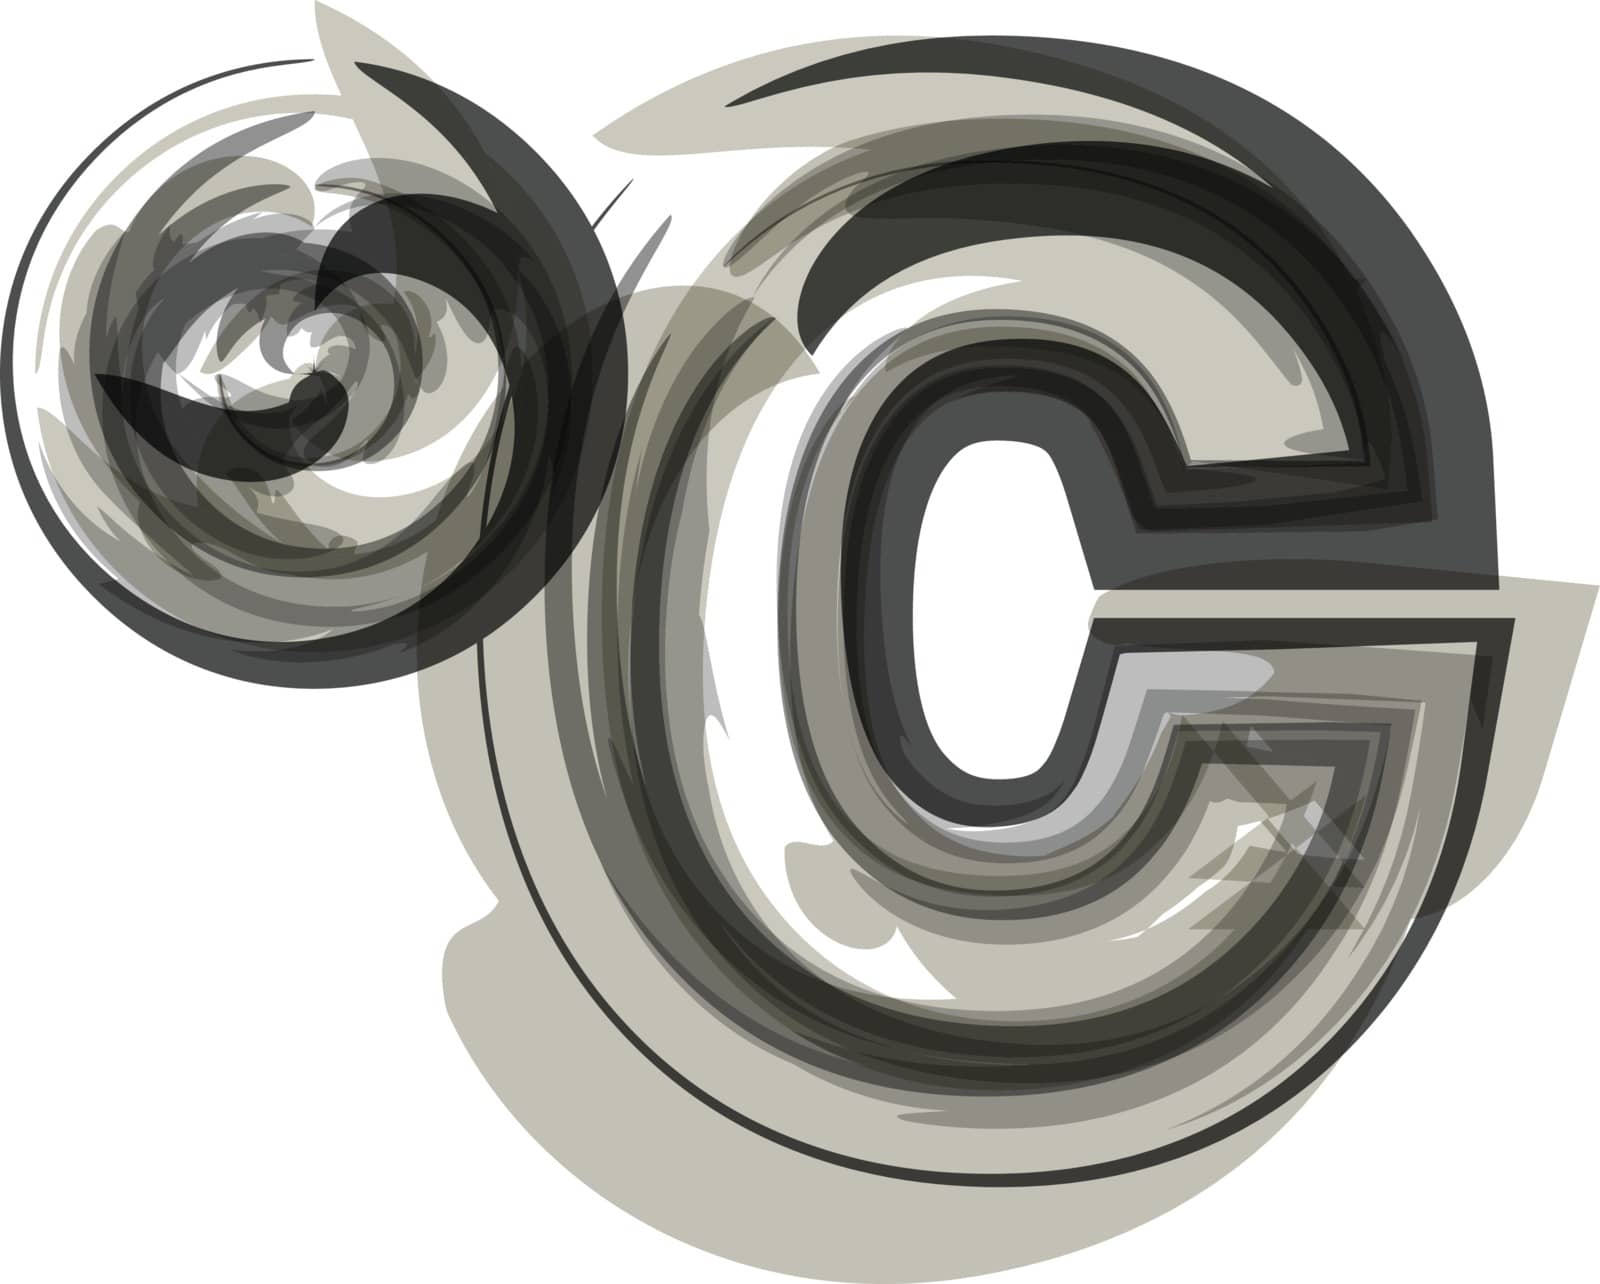 Abstract celcius Symbol illustration